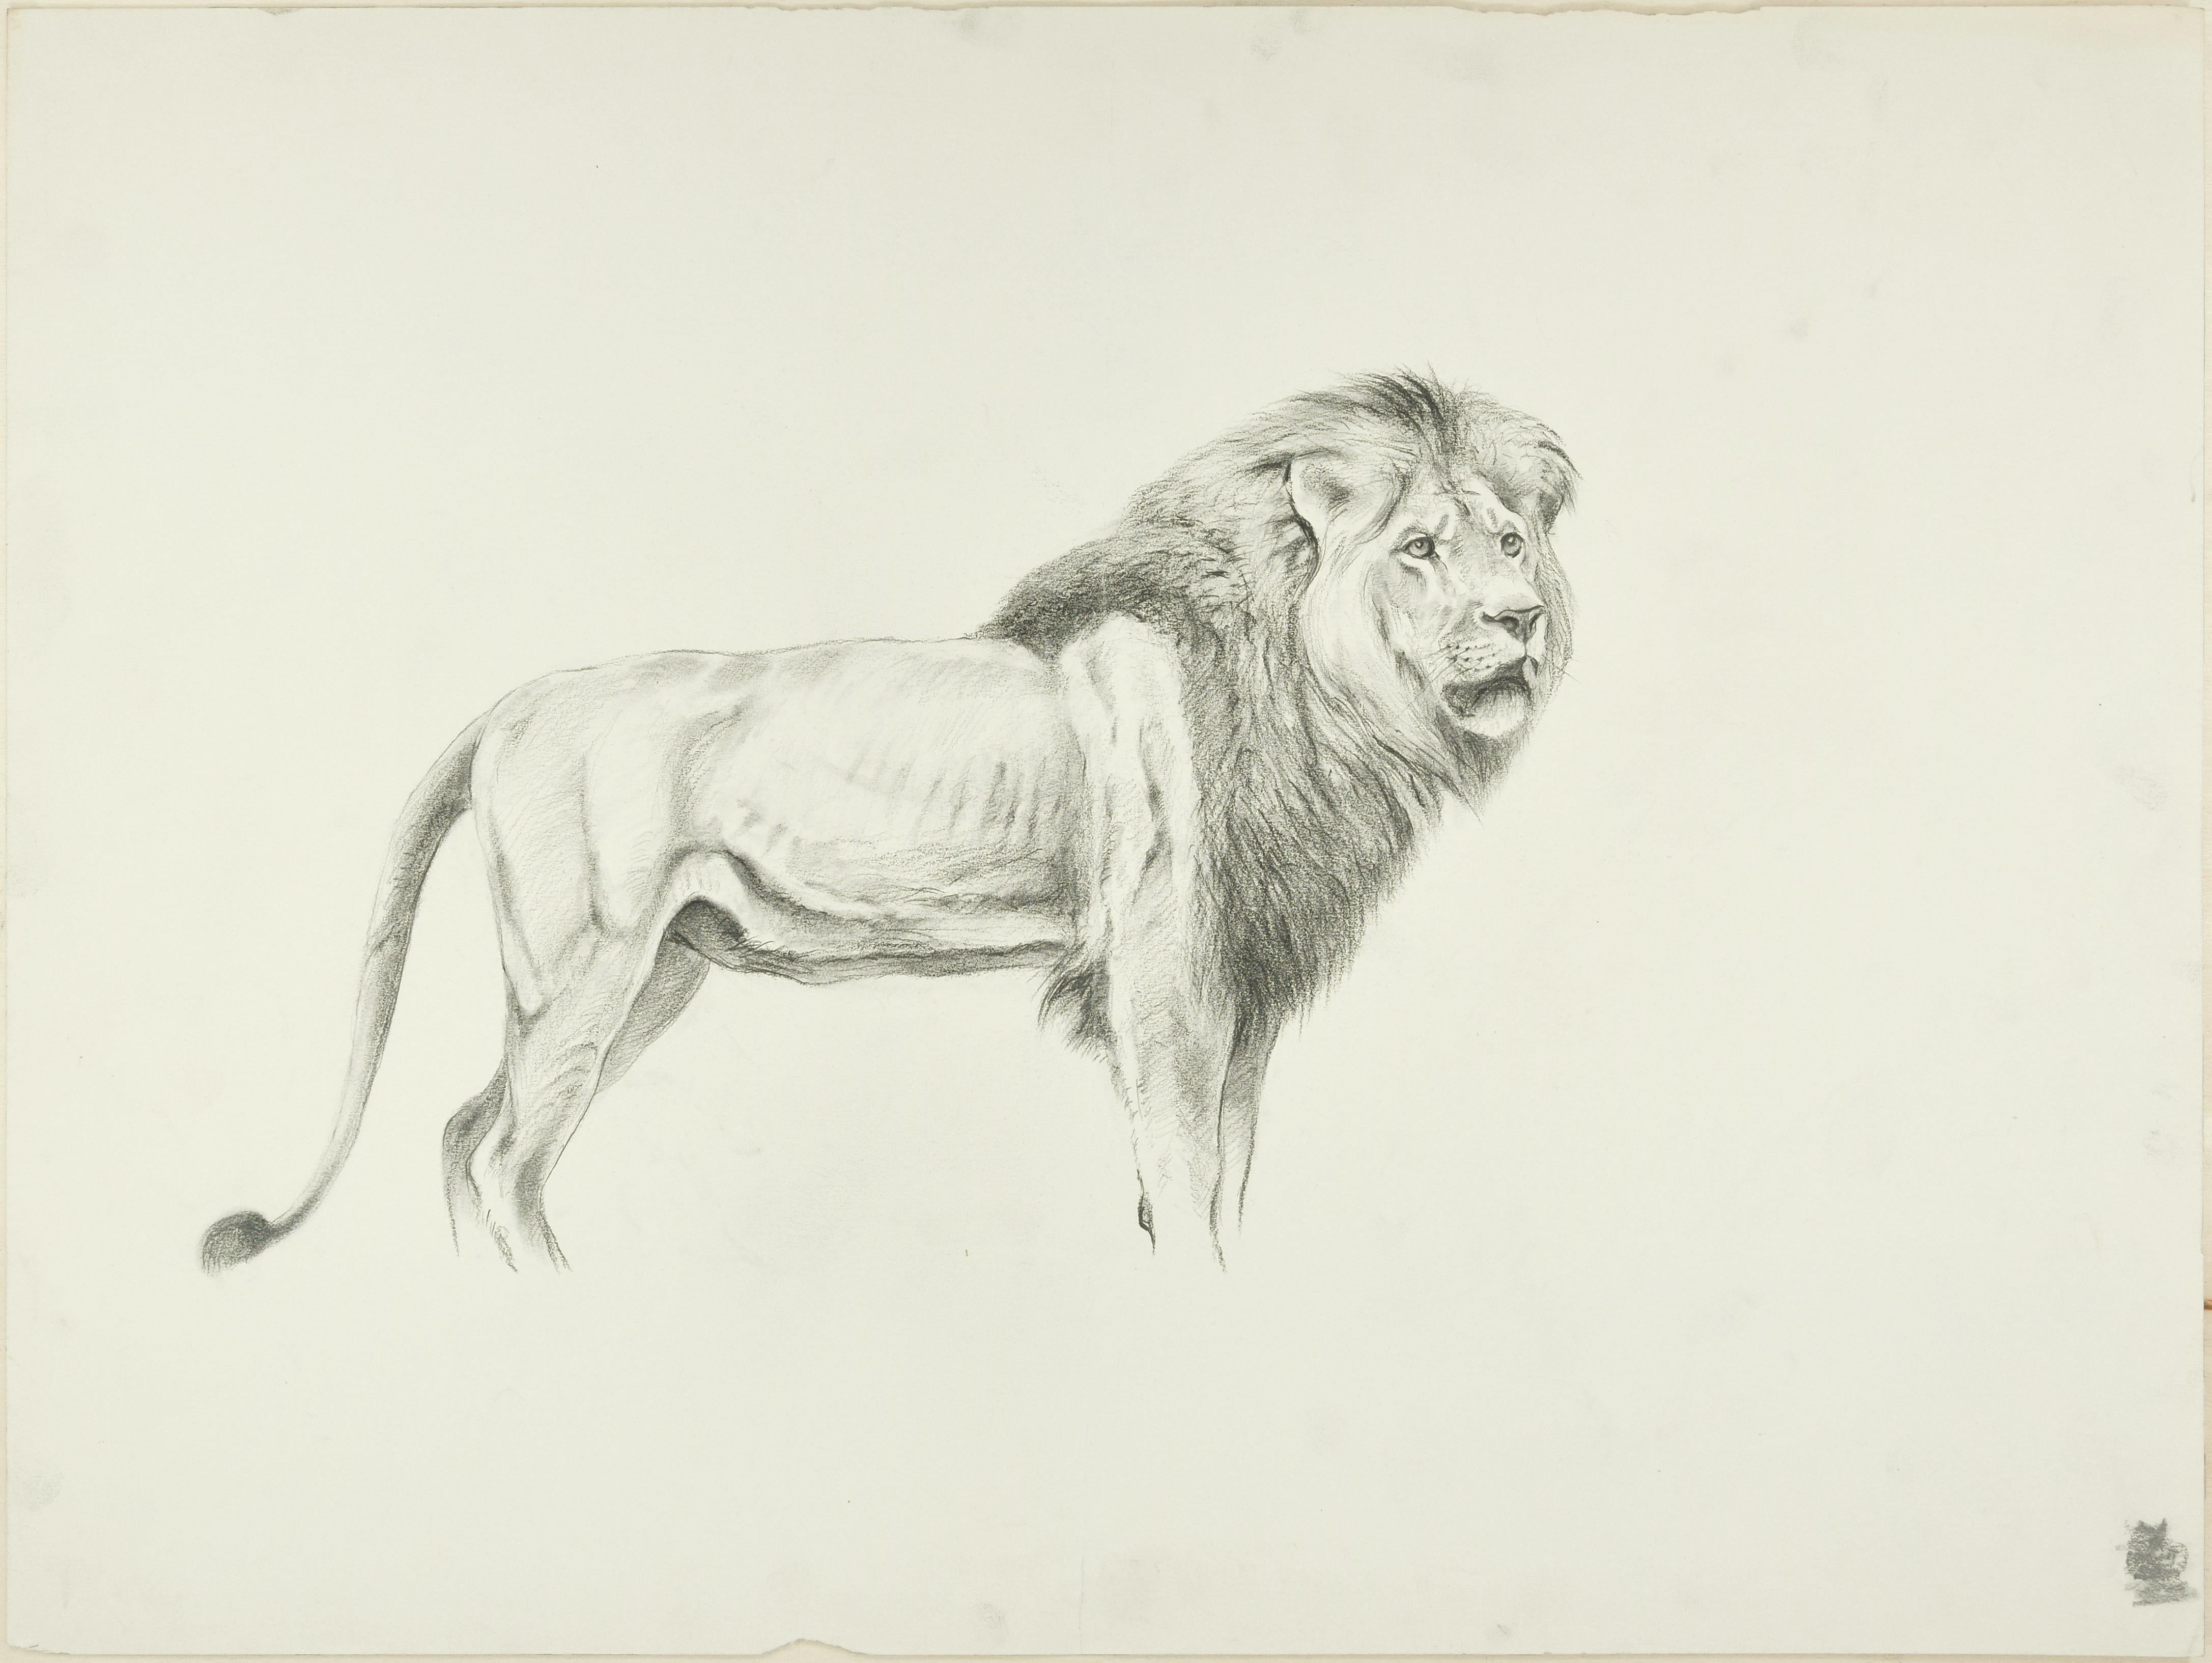 Wilhelm Lorenz Figurative Art - Profile of Lion - Original Pencil Drawing by Willy Lorenz - Mid 20th Century